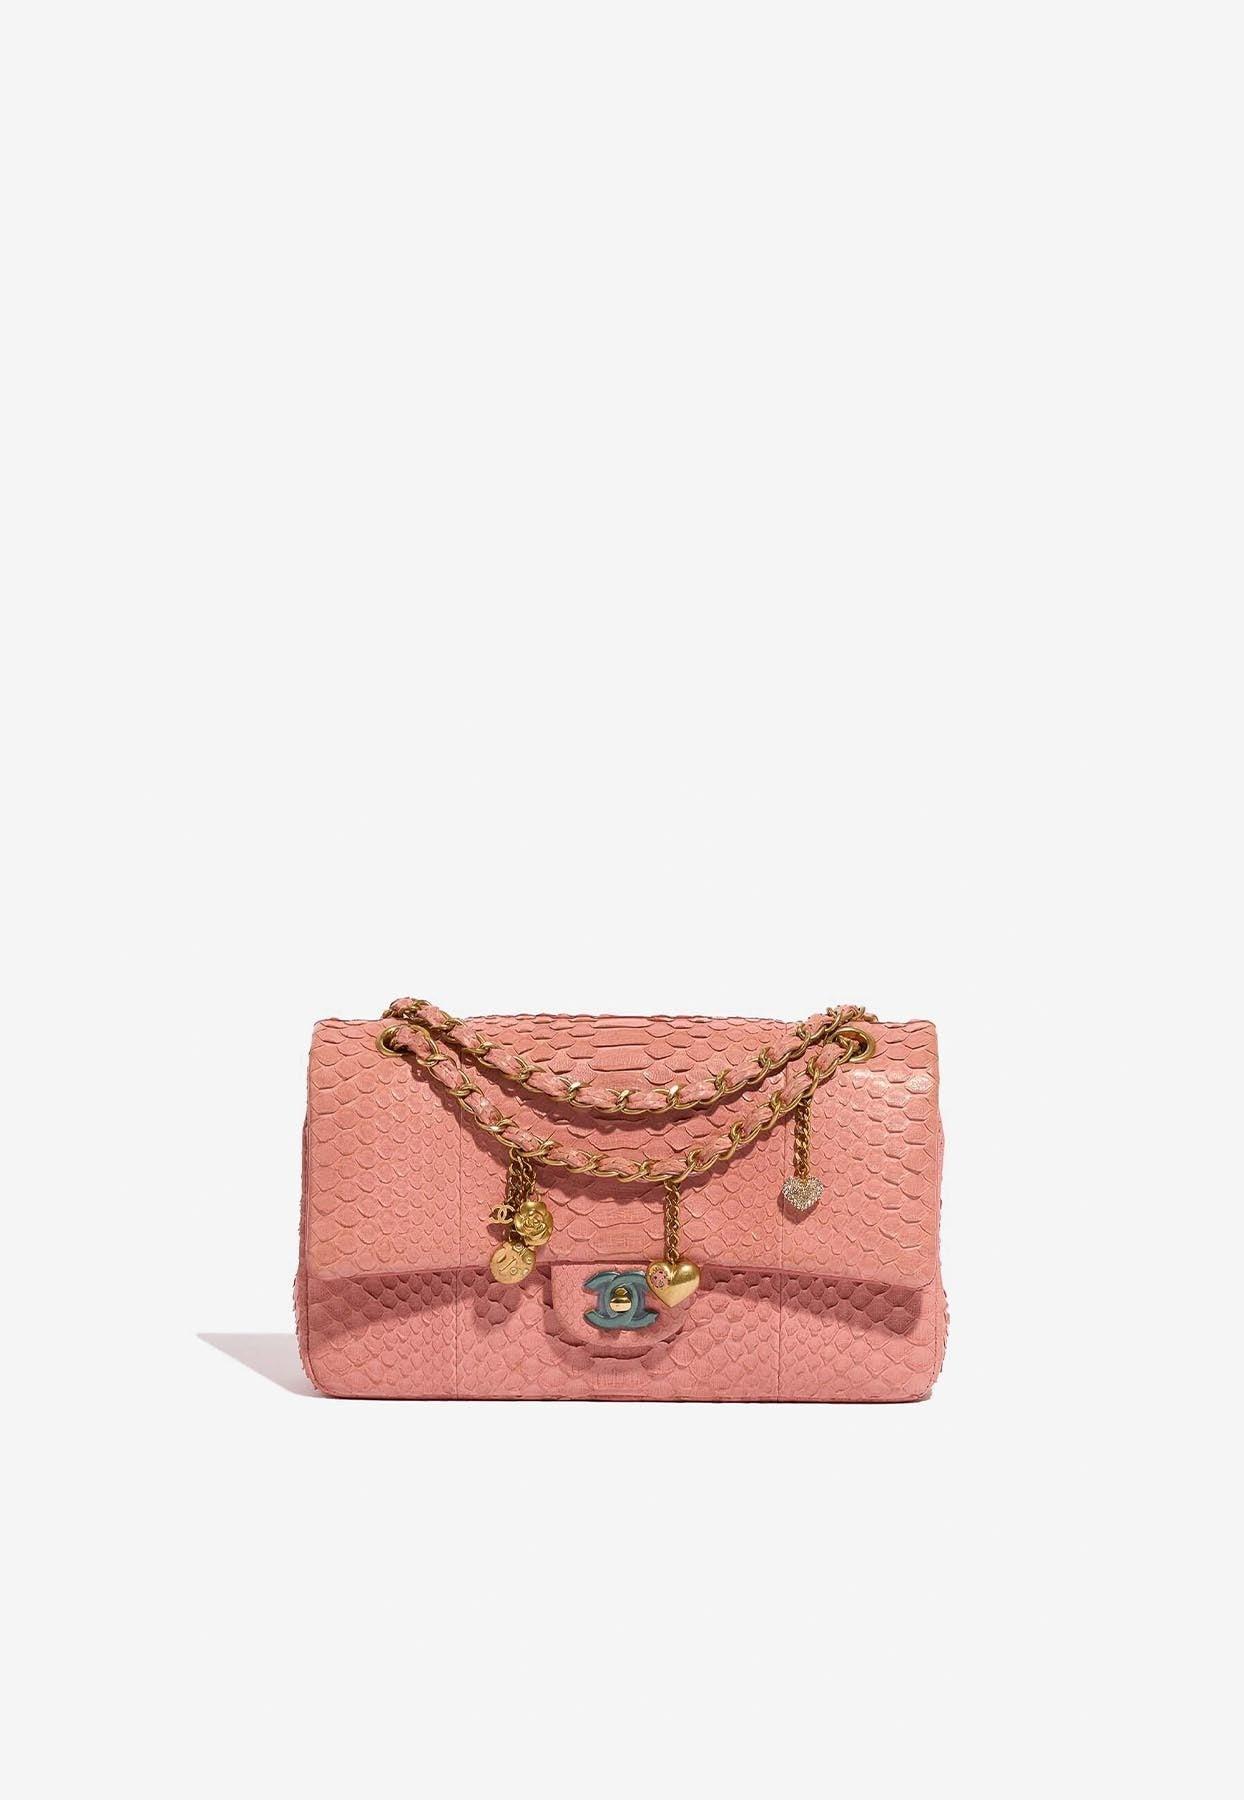 Chanel Medium Timeless Shoulder Bag In Dusty Rose Python Leather